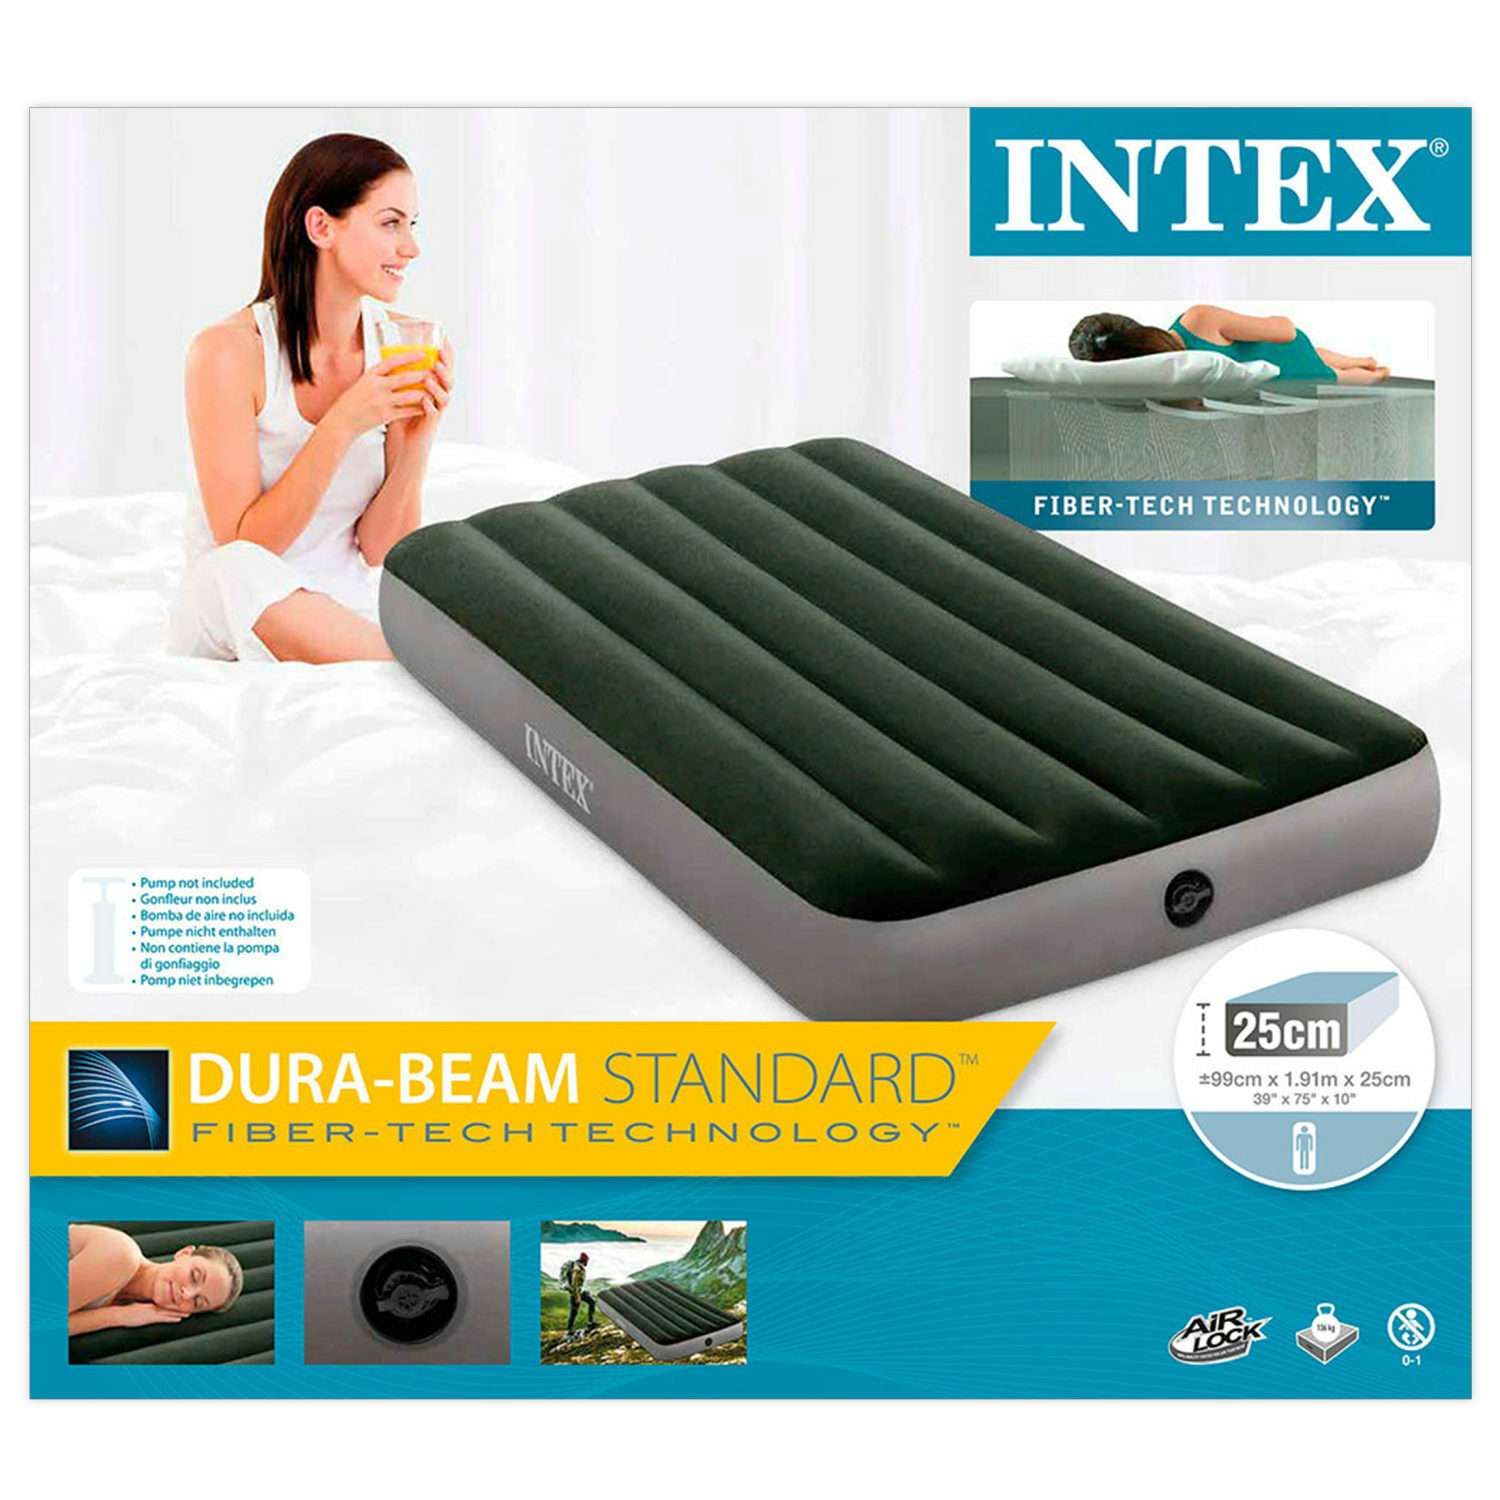 Надувной матрас INTEX кровать дюра бим престиж твин 99х191х25 см - фото 4